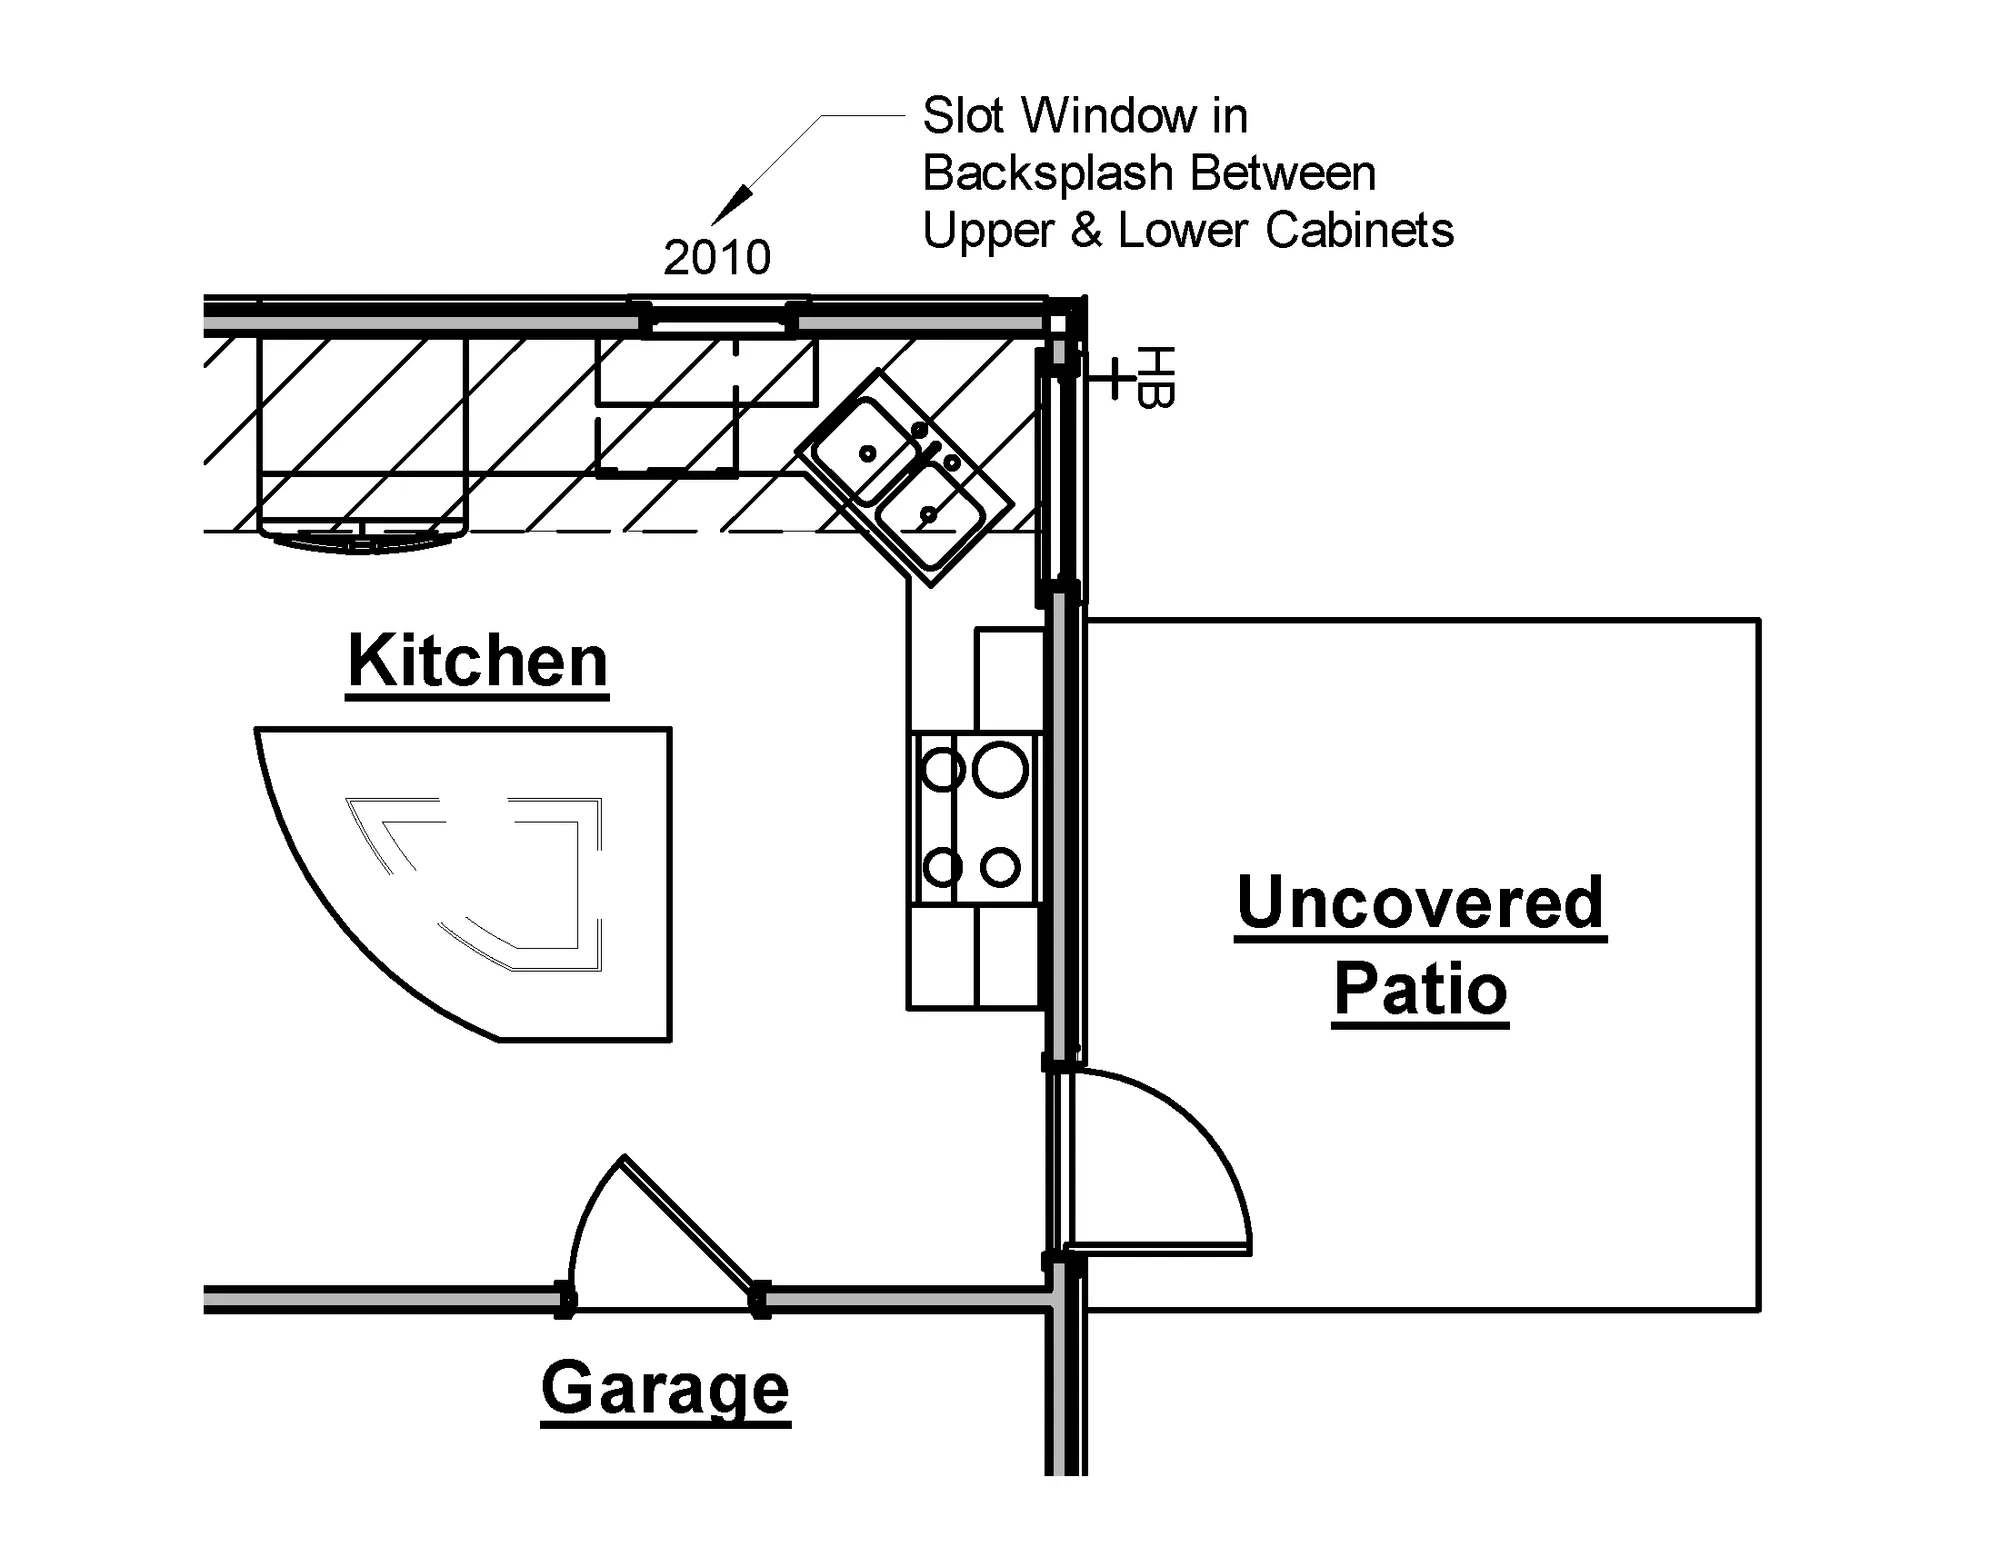 Kitchen Slot Window Option - undefined